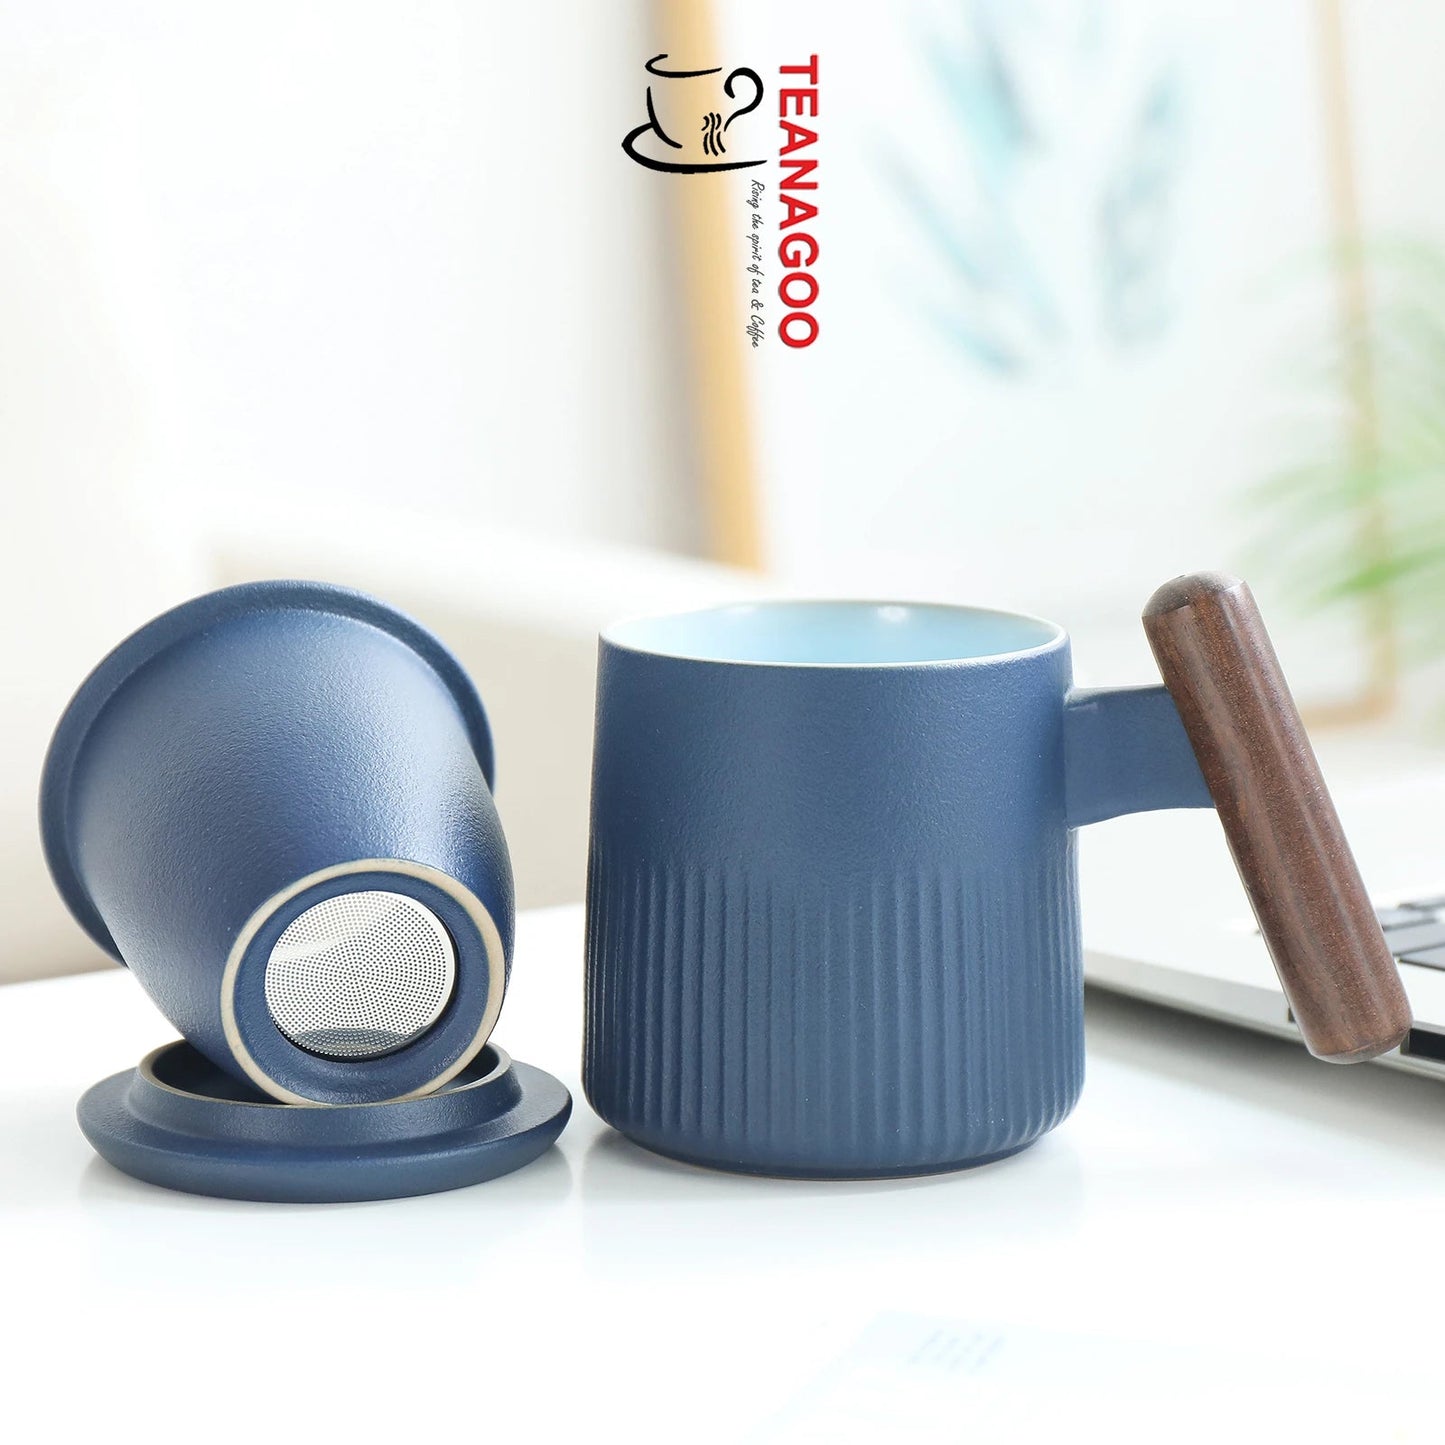 Ceramic Tea Mug with Infuser & Box Packing